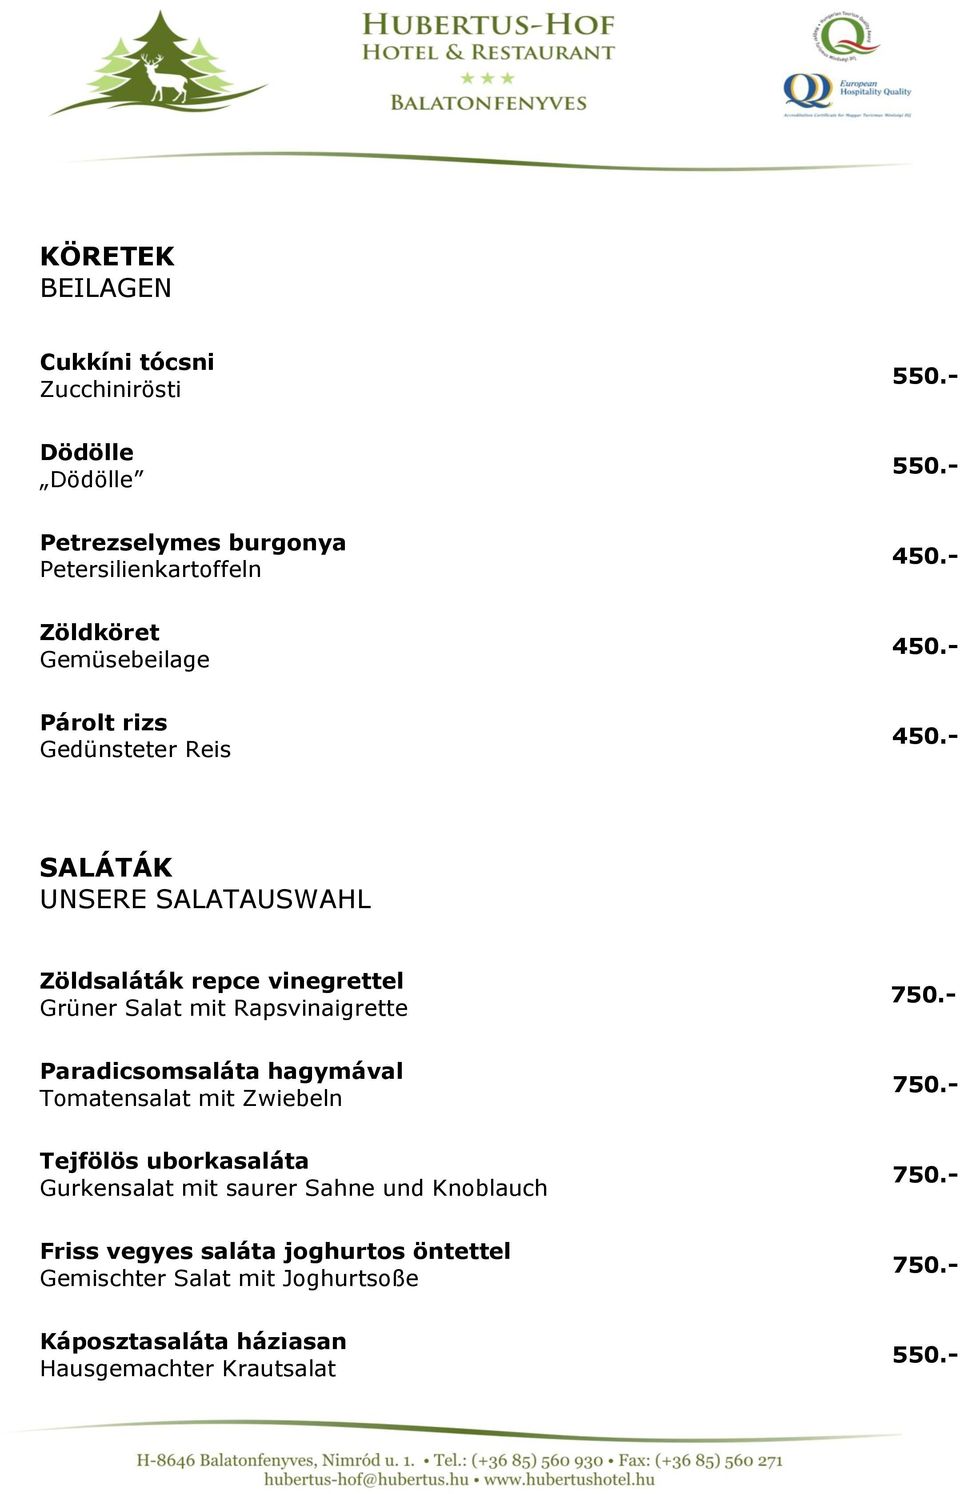 - SALÁTÁK UNSERE SALATAUSWAHL Zöldsaláták repce vinegrettel Grüner Salat mit Rapsvinaigrette 750.